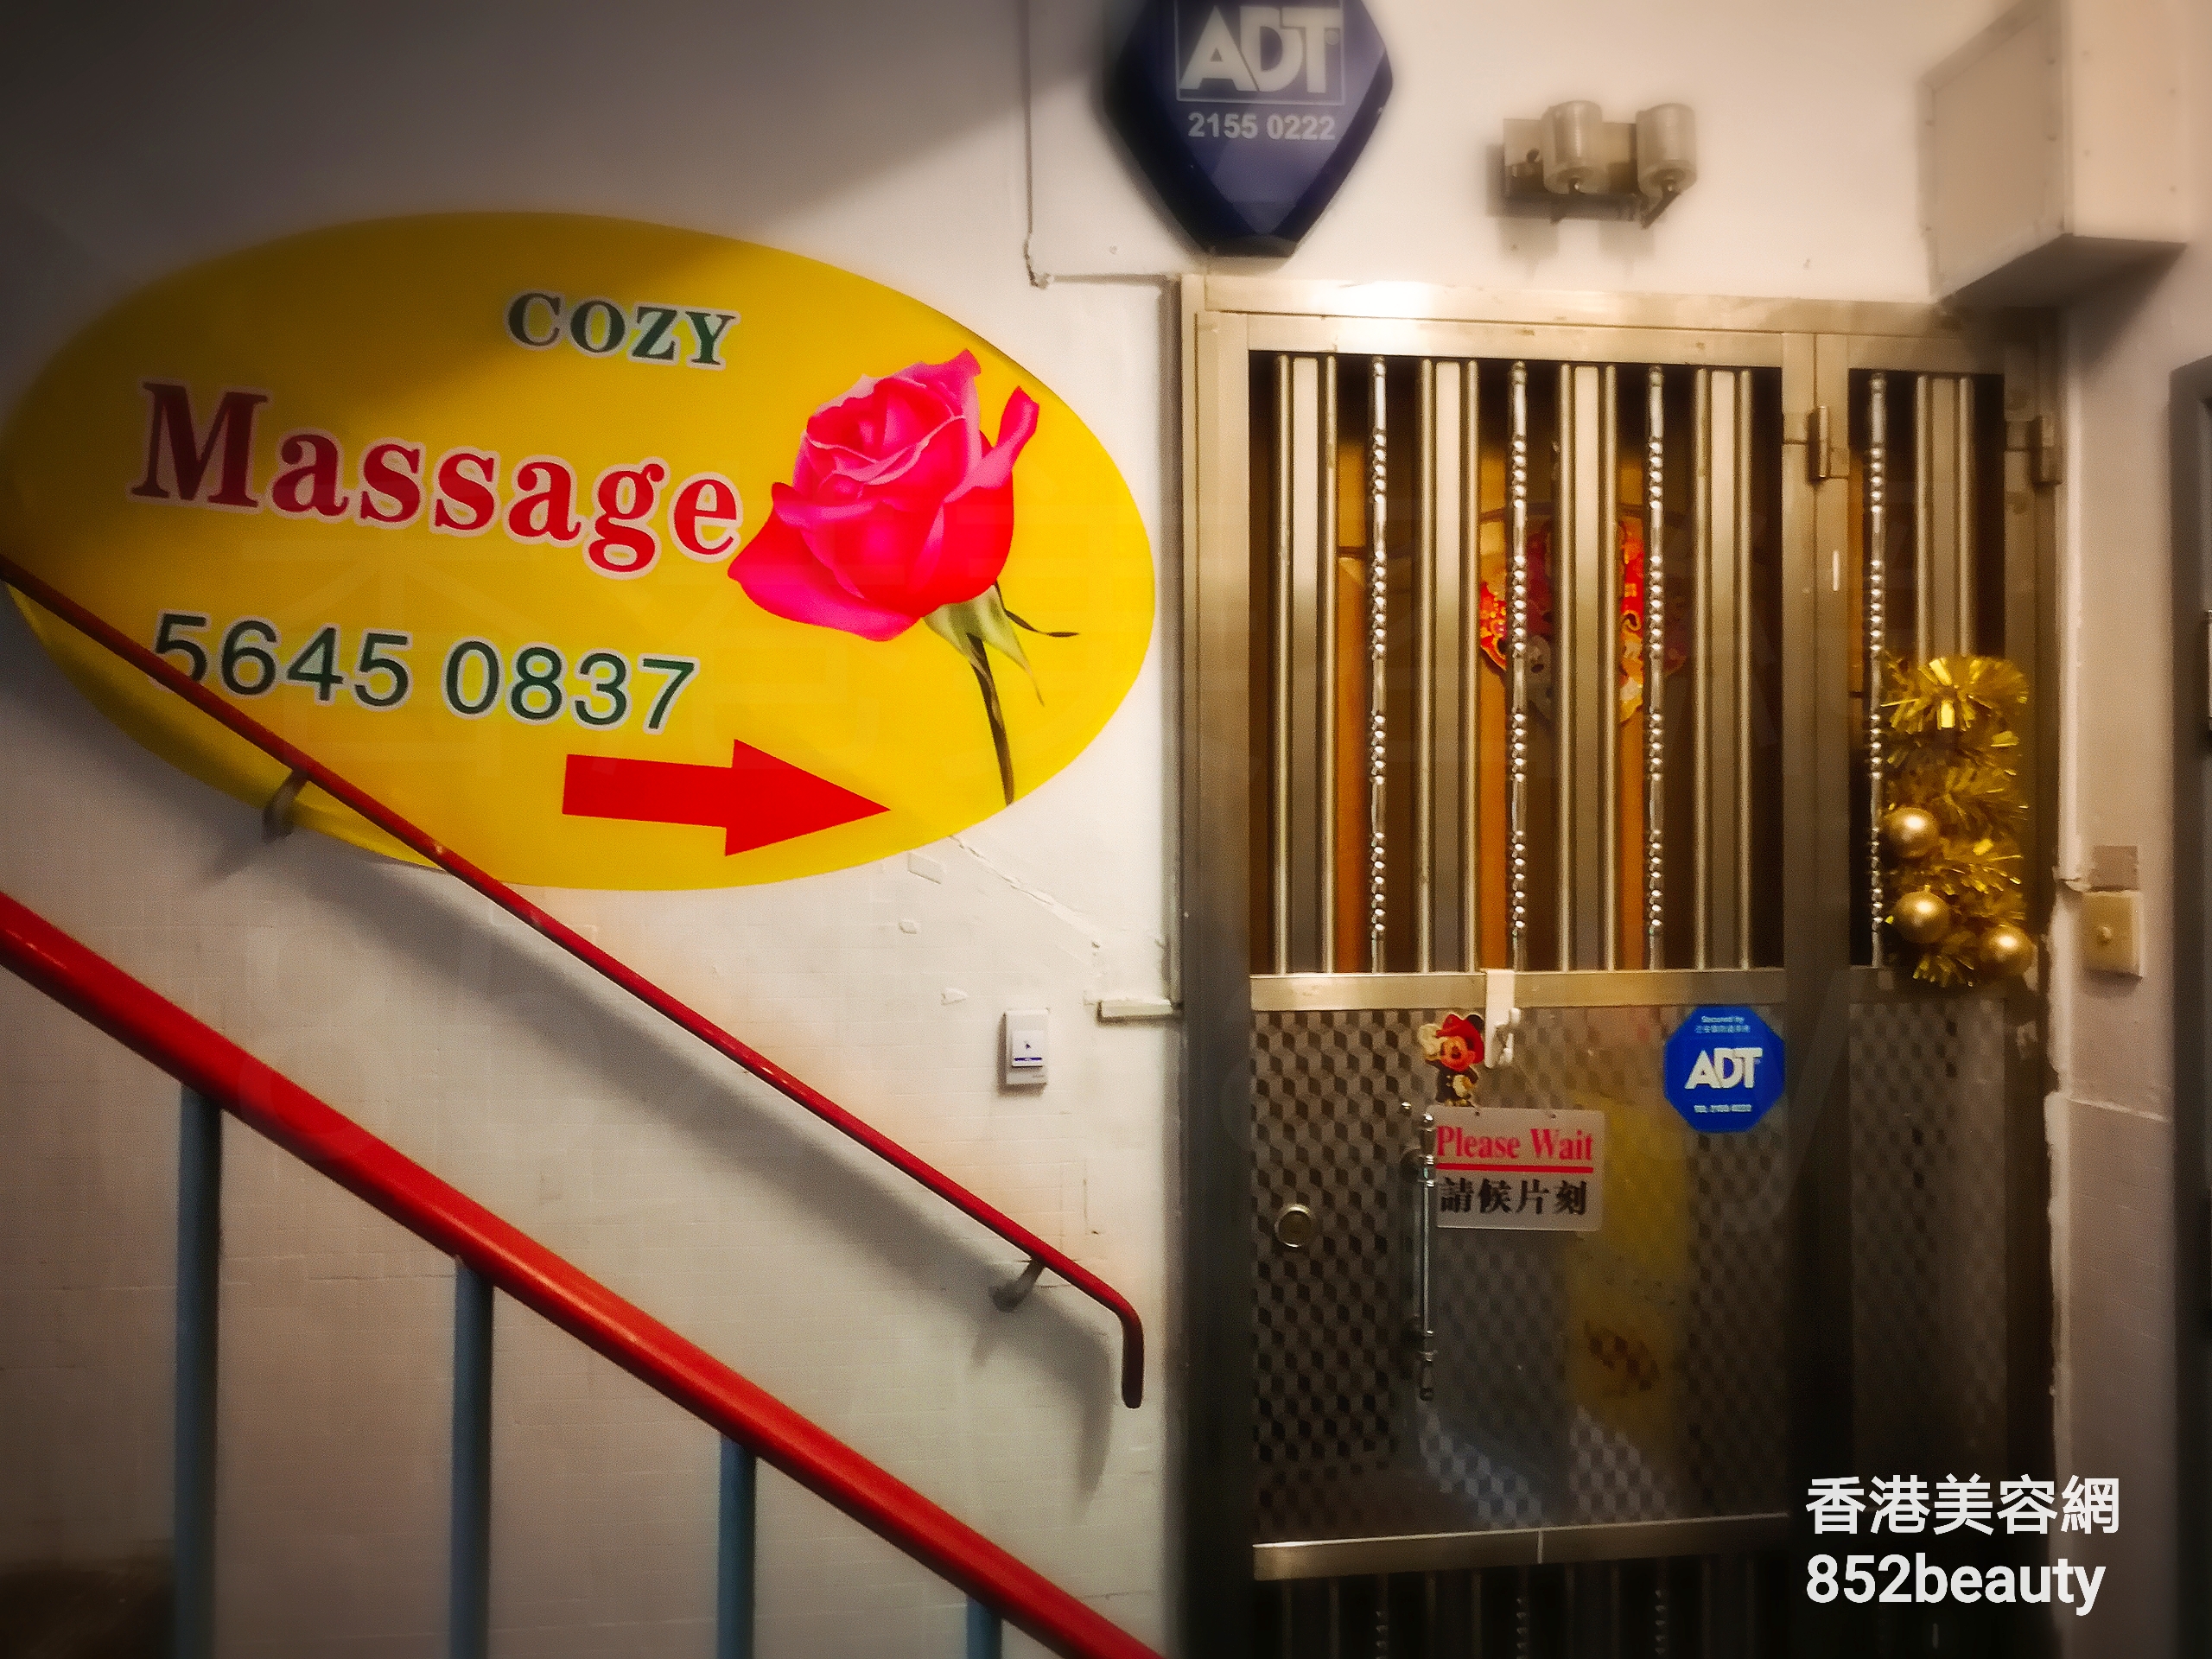 香港美容網 Hong Kong Beauty Salon 美容院 / 美容師: COZY Massage